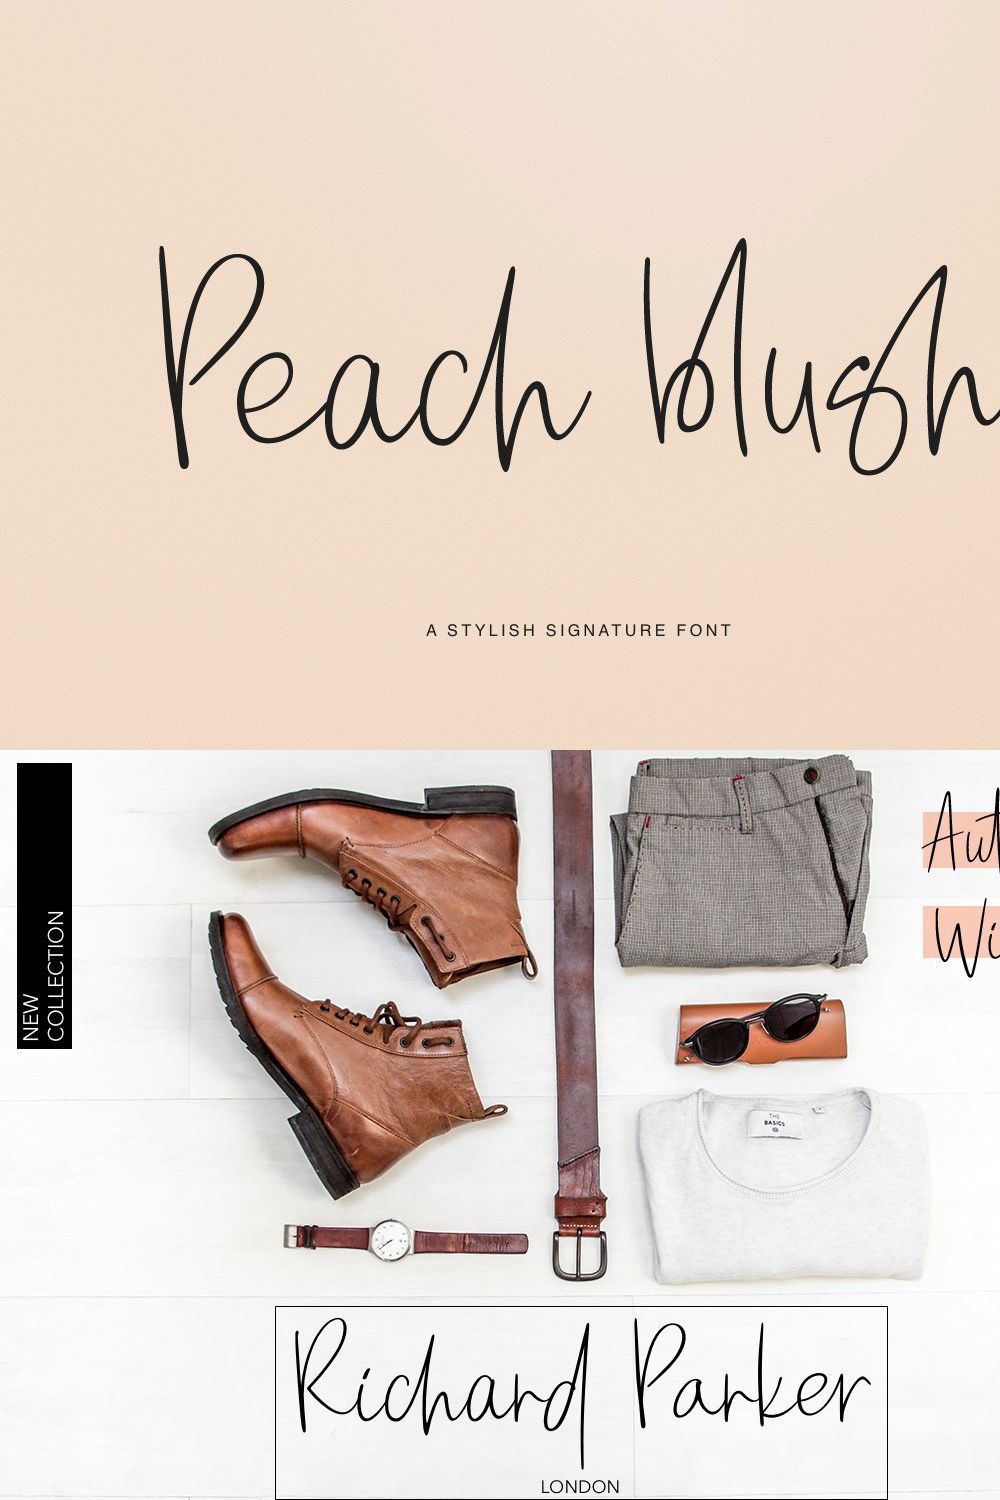 Peach blush pinterest preview image.